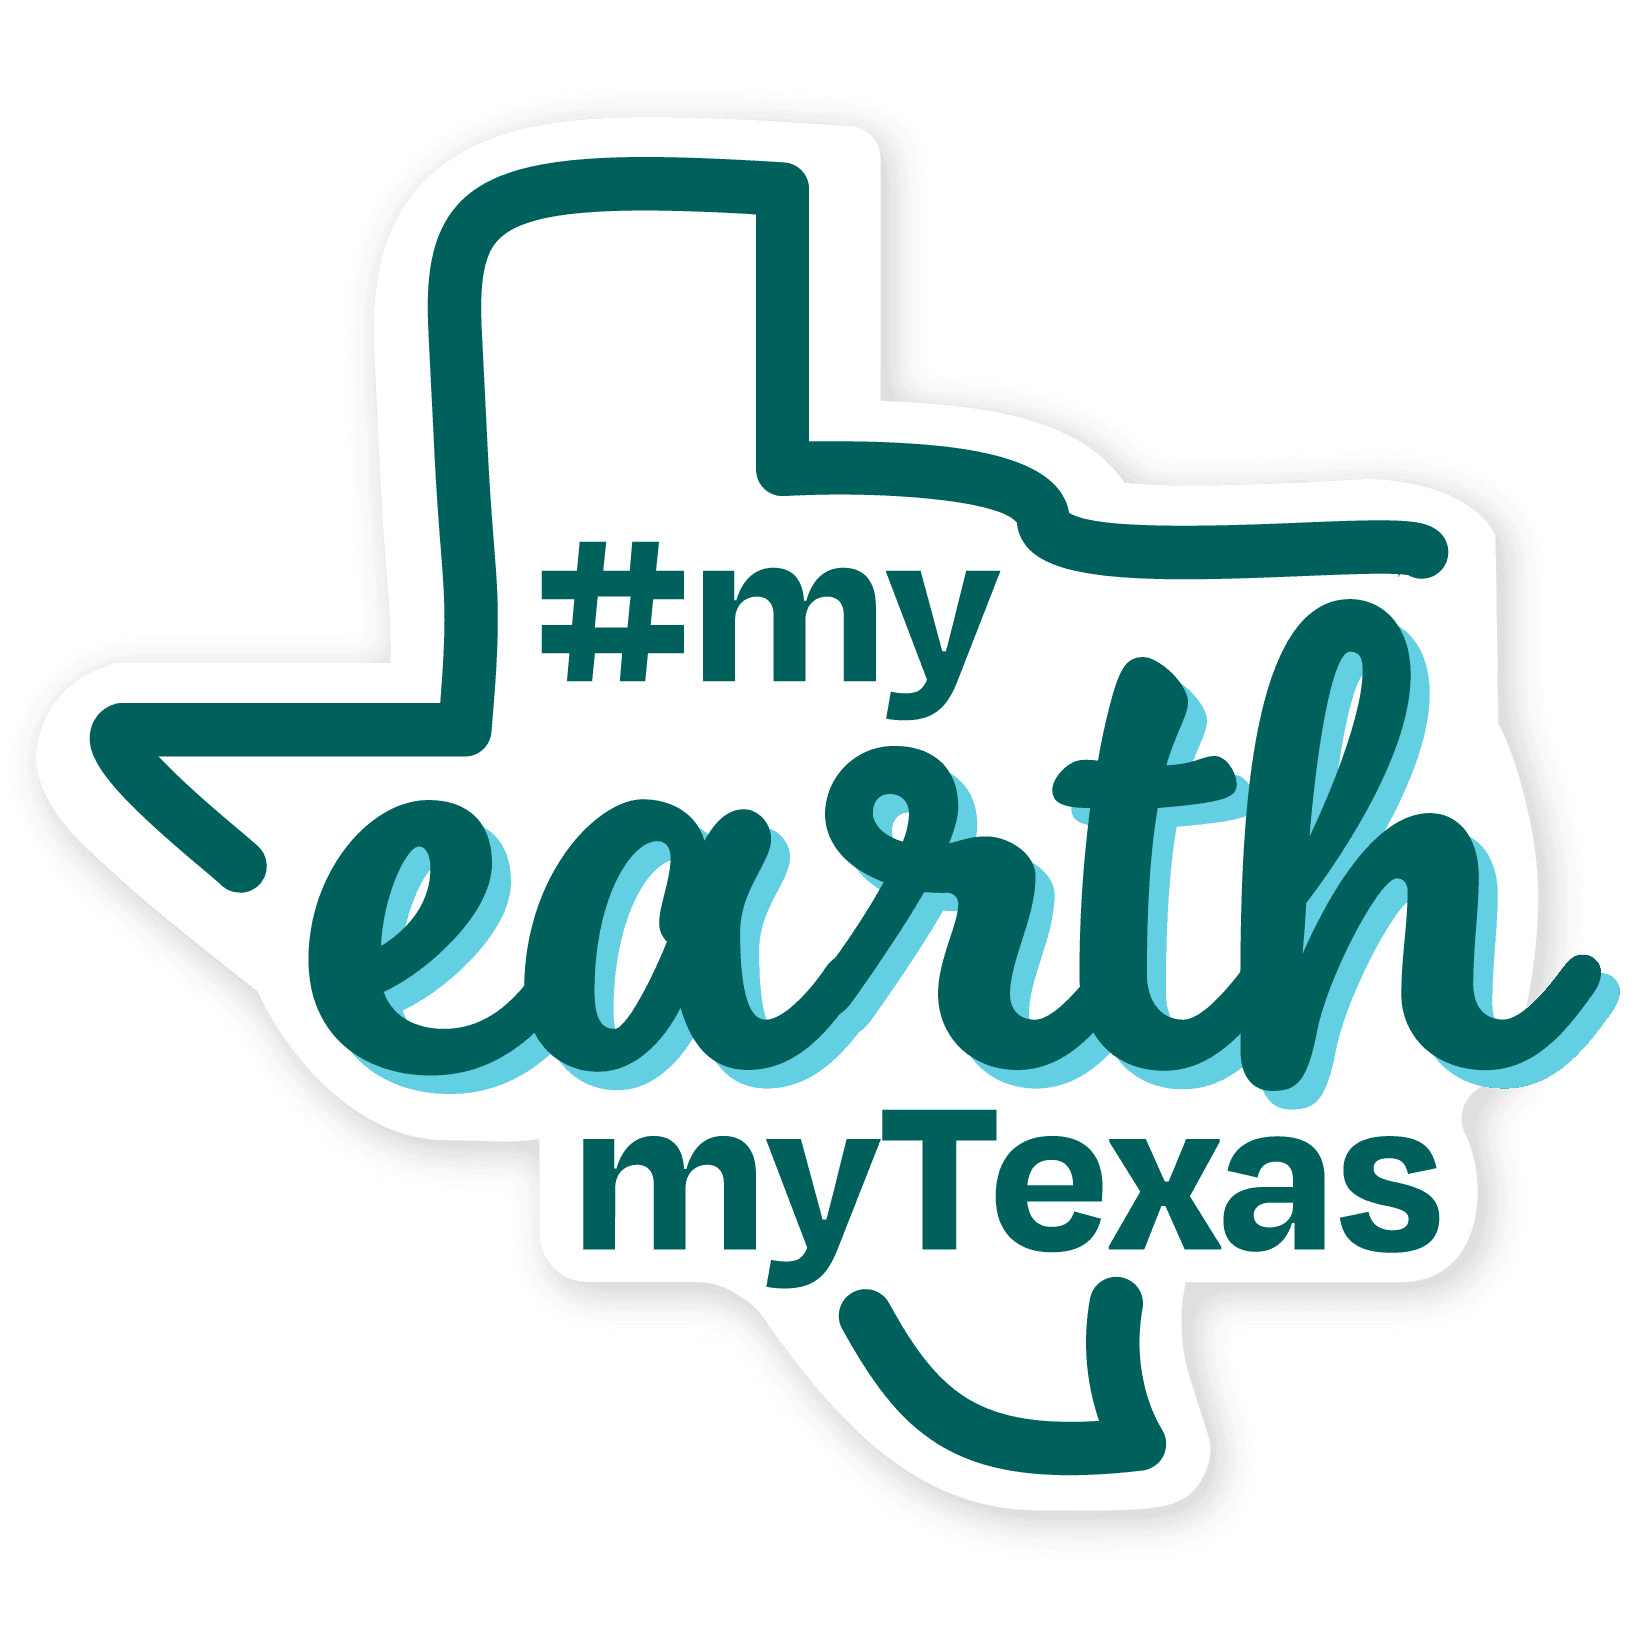 #MyEarthMyTexas Challenge by EarthShare Texas